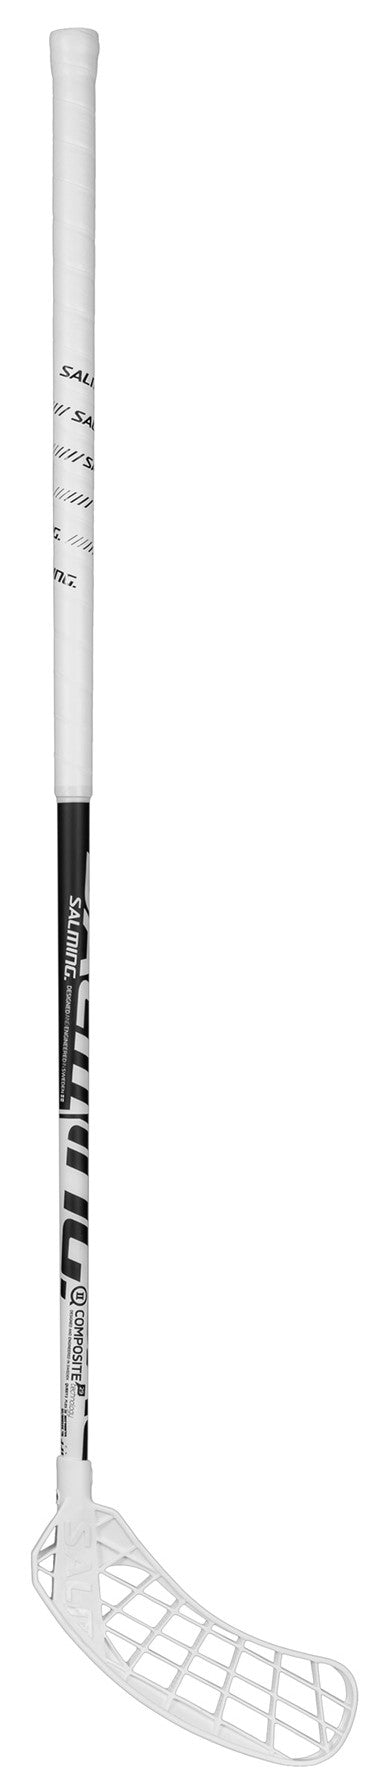 Salming Composite 32 Floorball Stick - 93cm